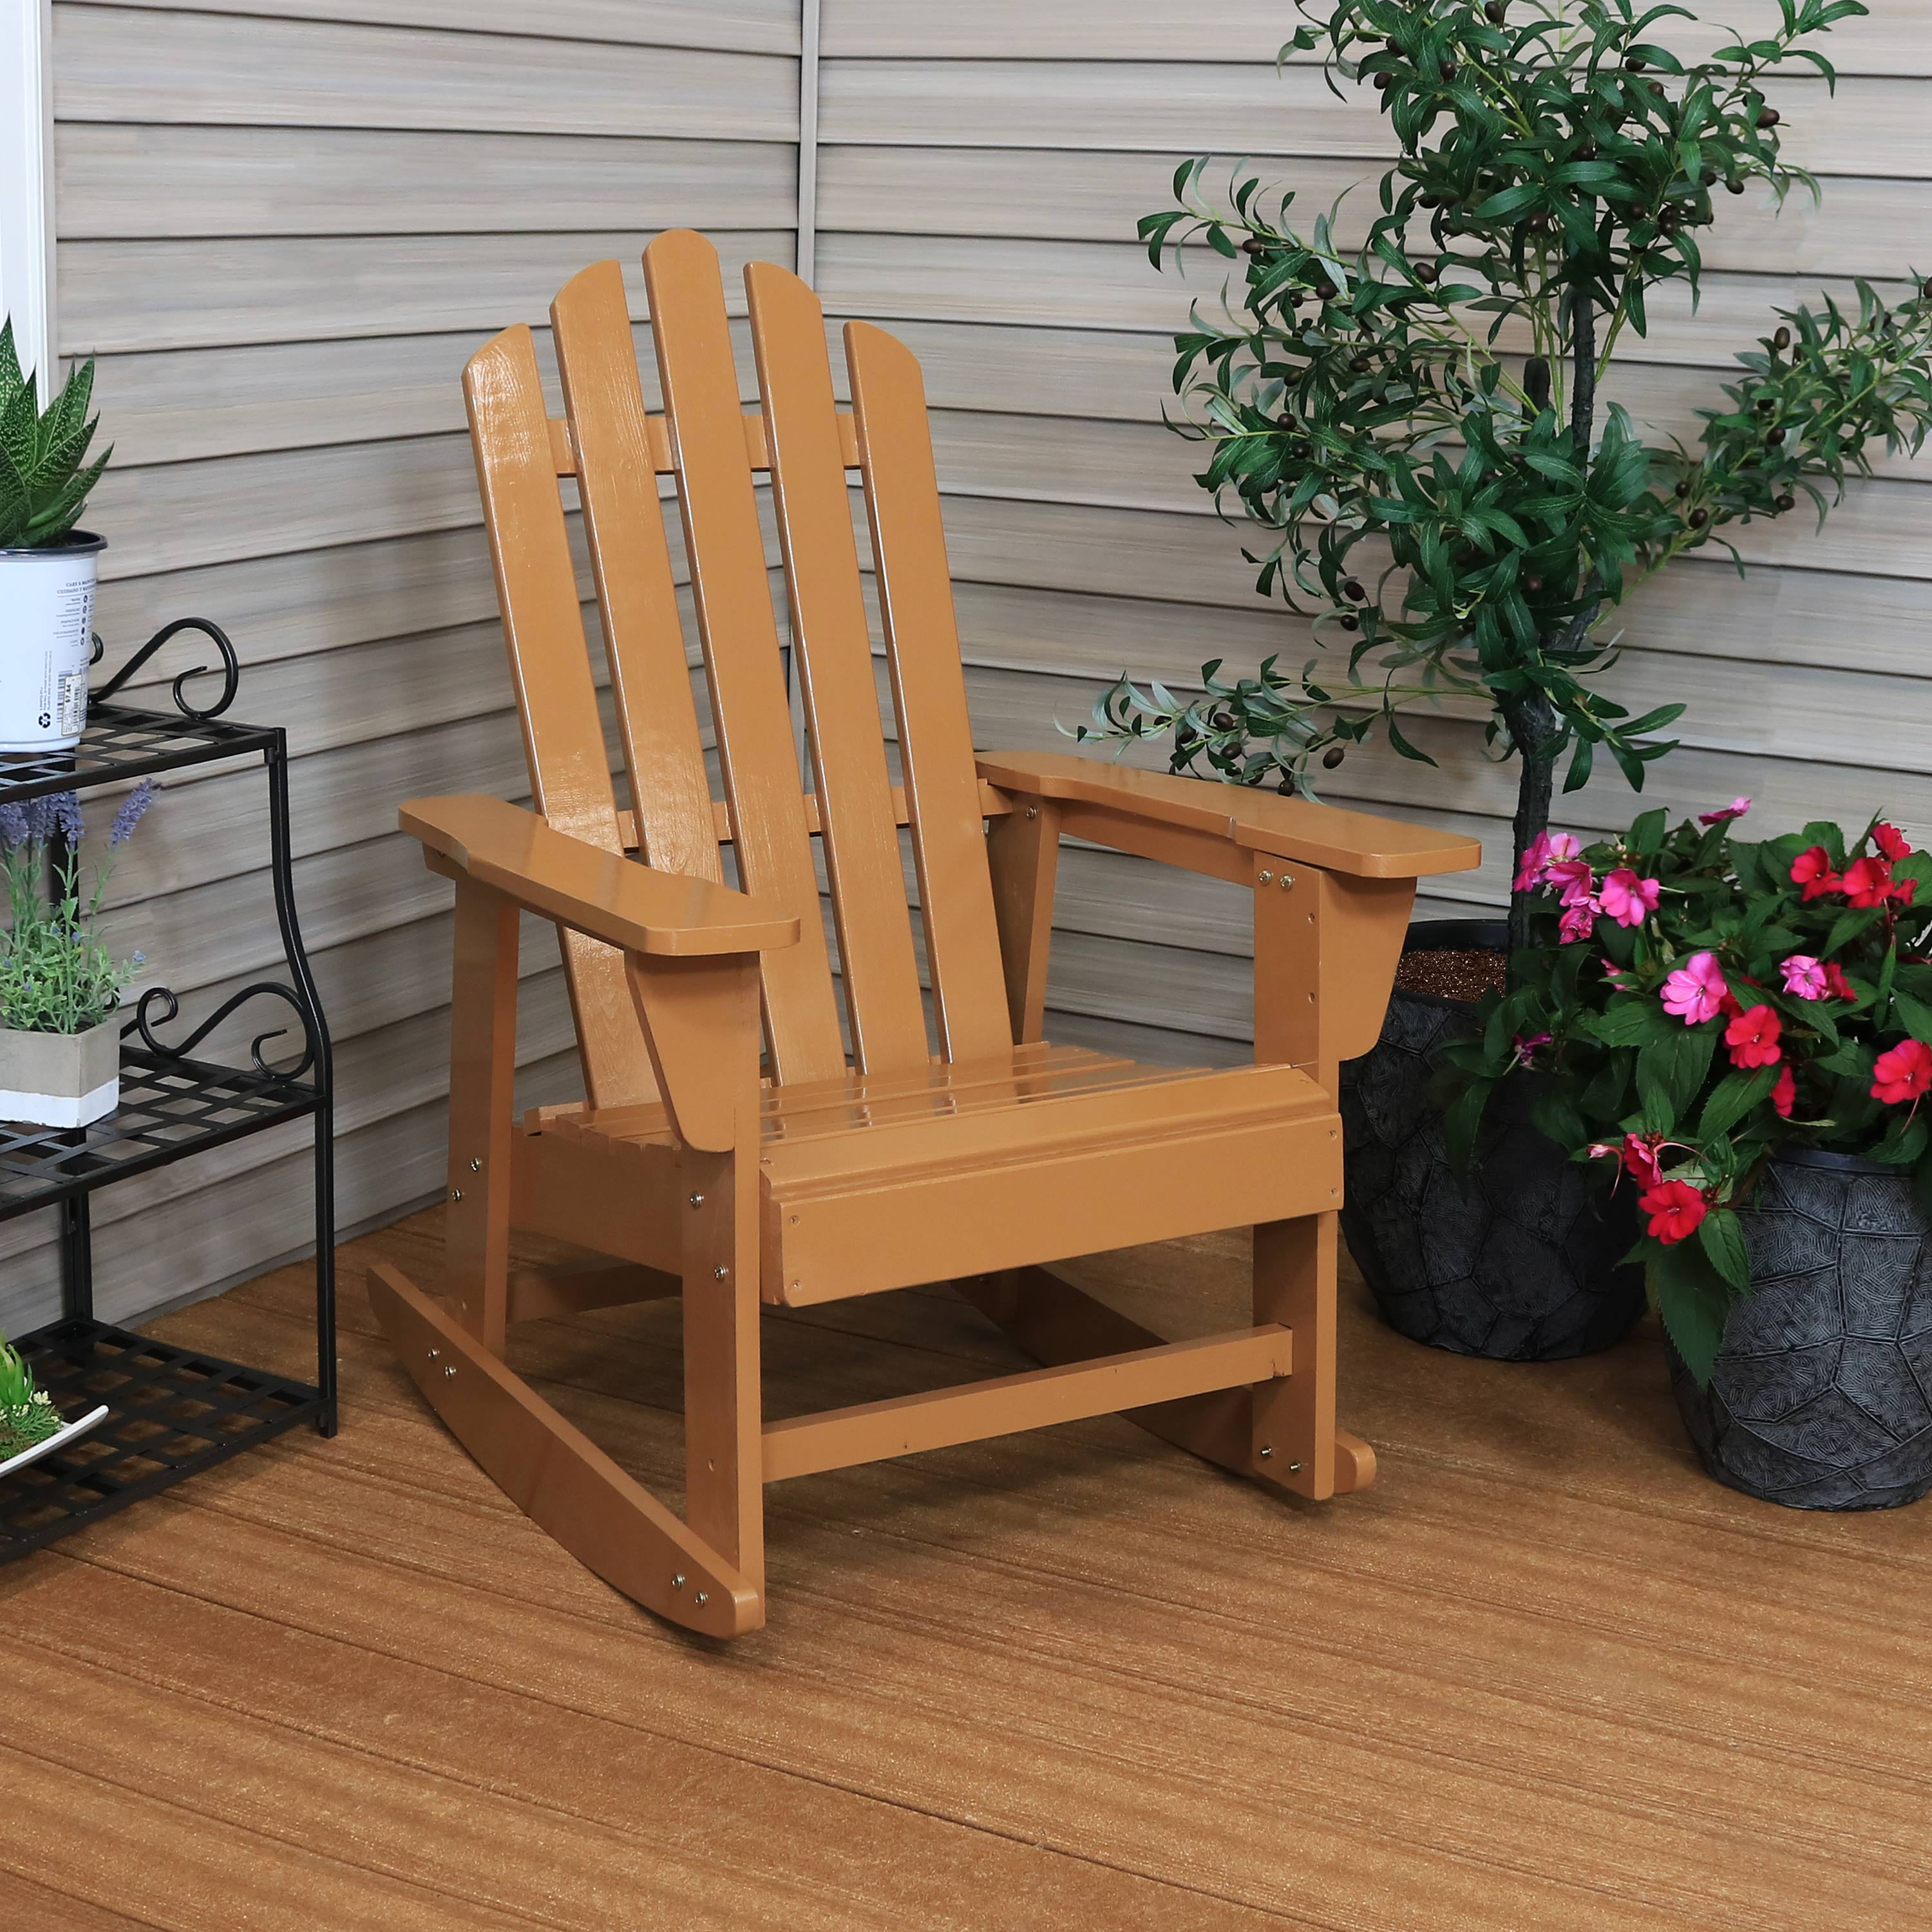 250-Pound Capacity Sunnydaze Classic Wooden Adirondack Rocking Chair with Cedar Finish